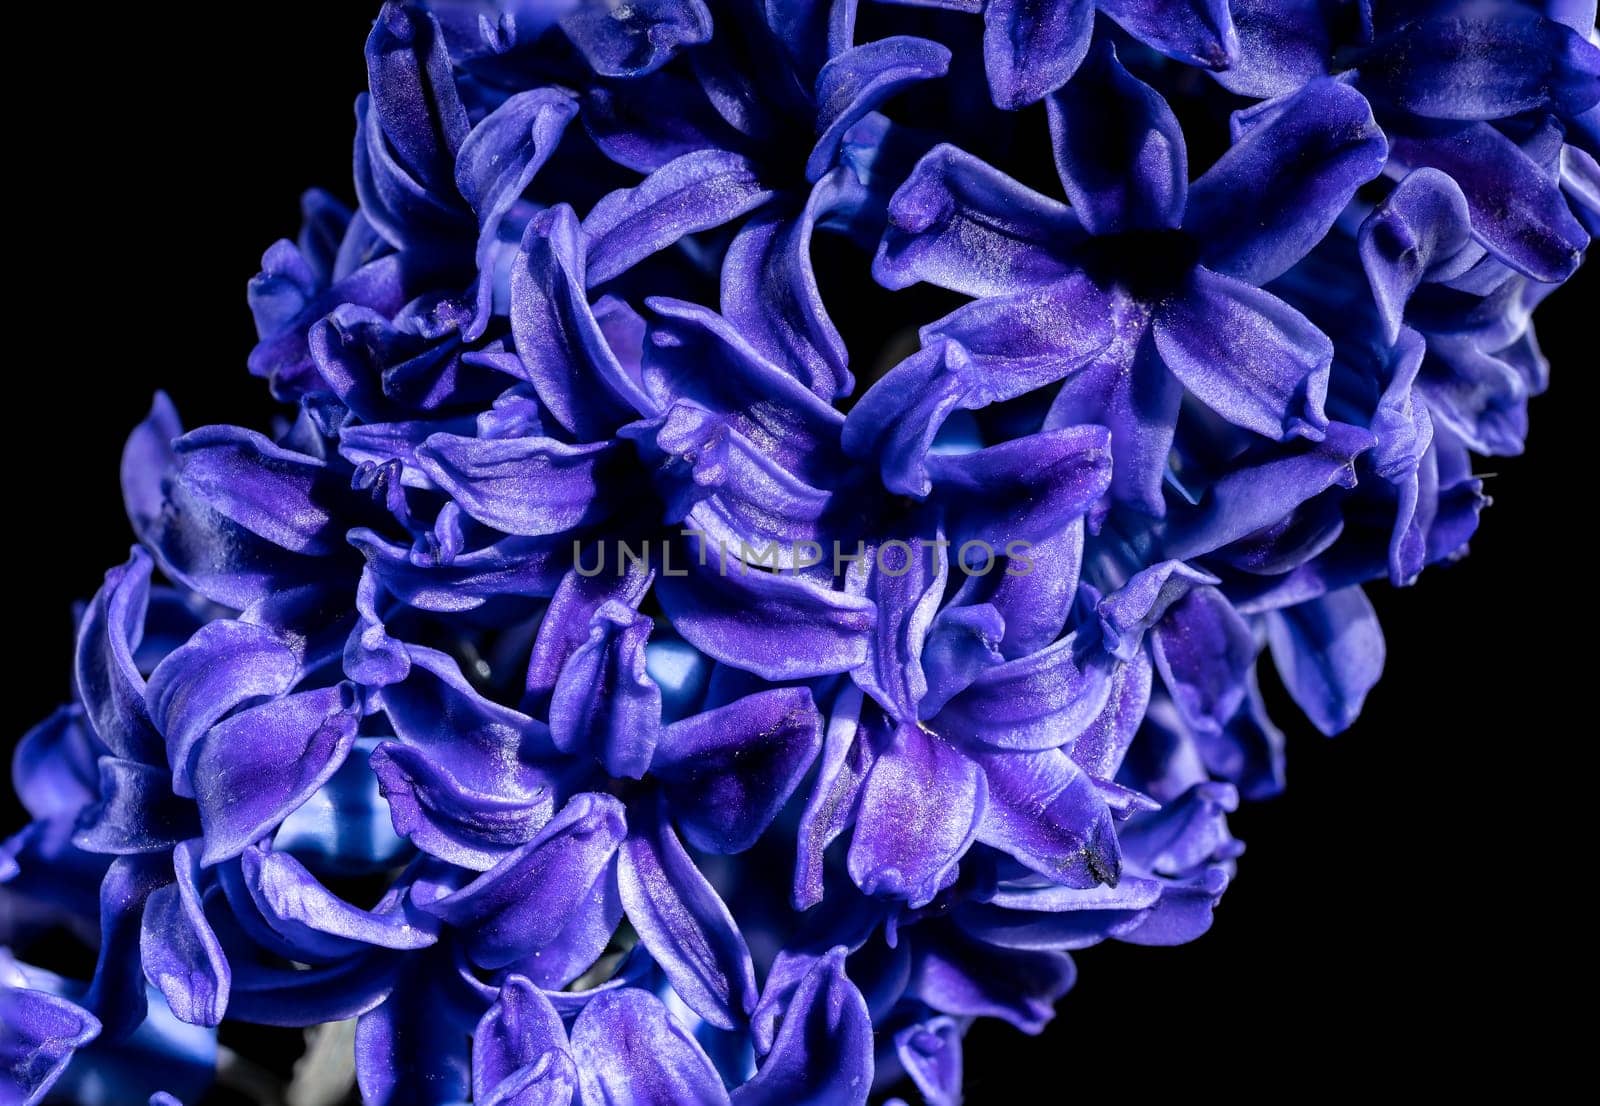 Purple Hyacinth flower on a black background by Multipedia